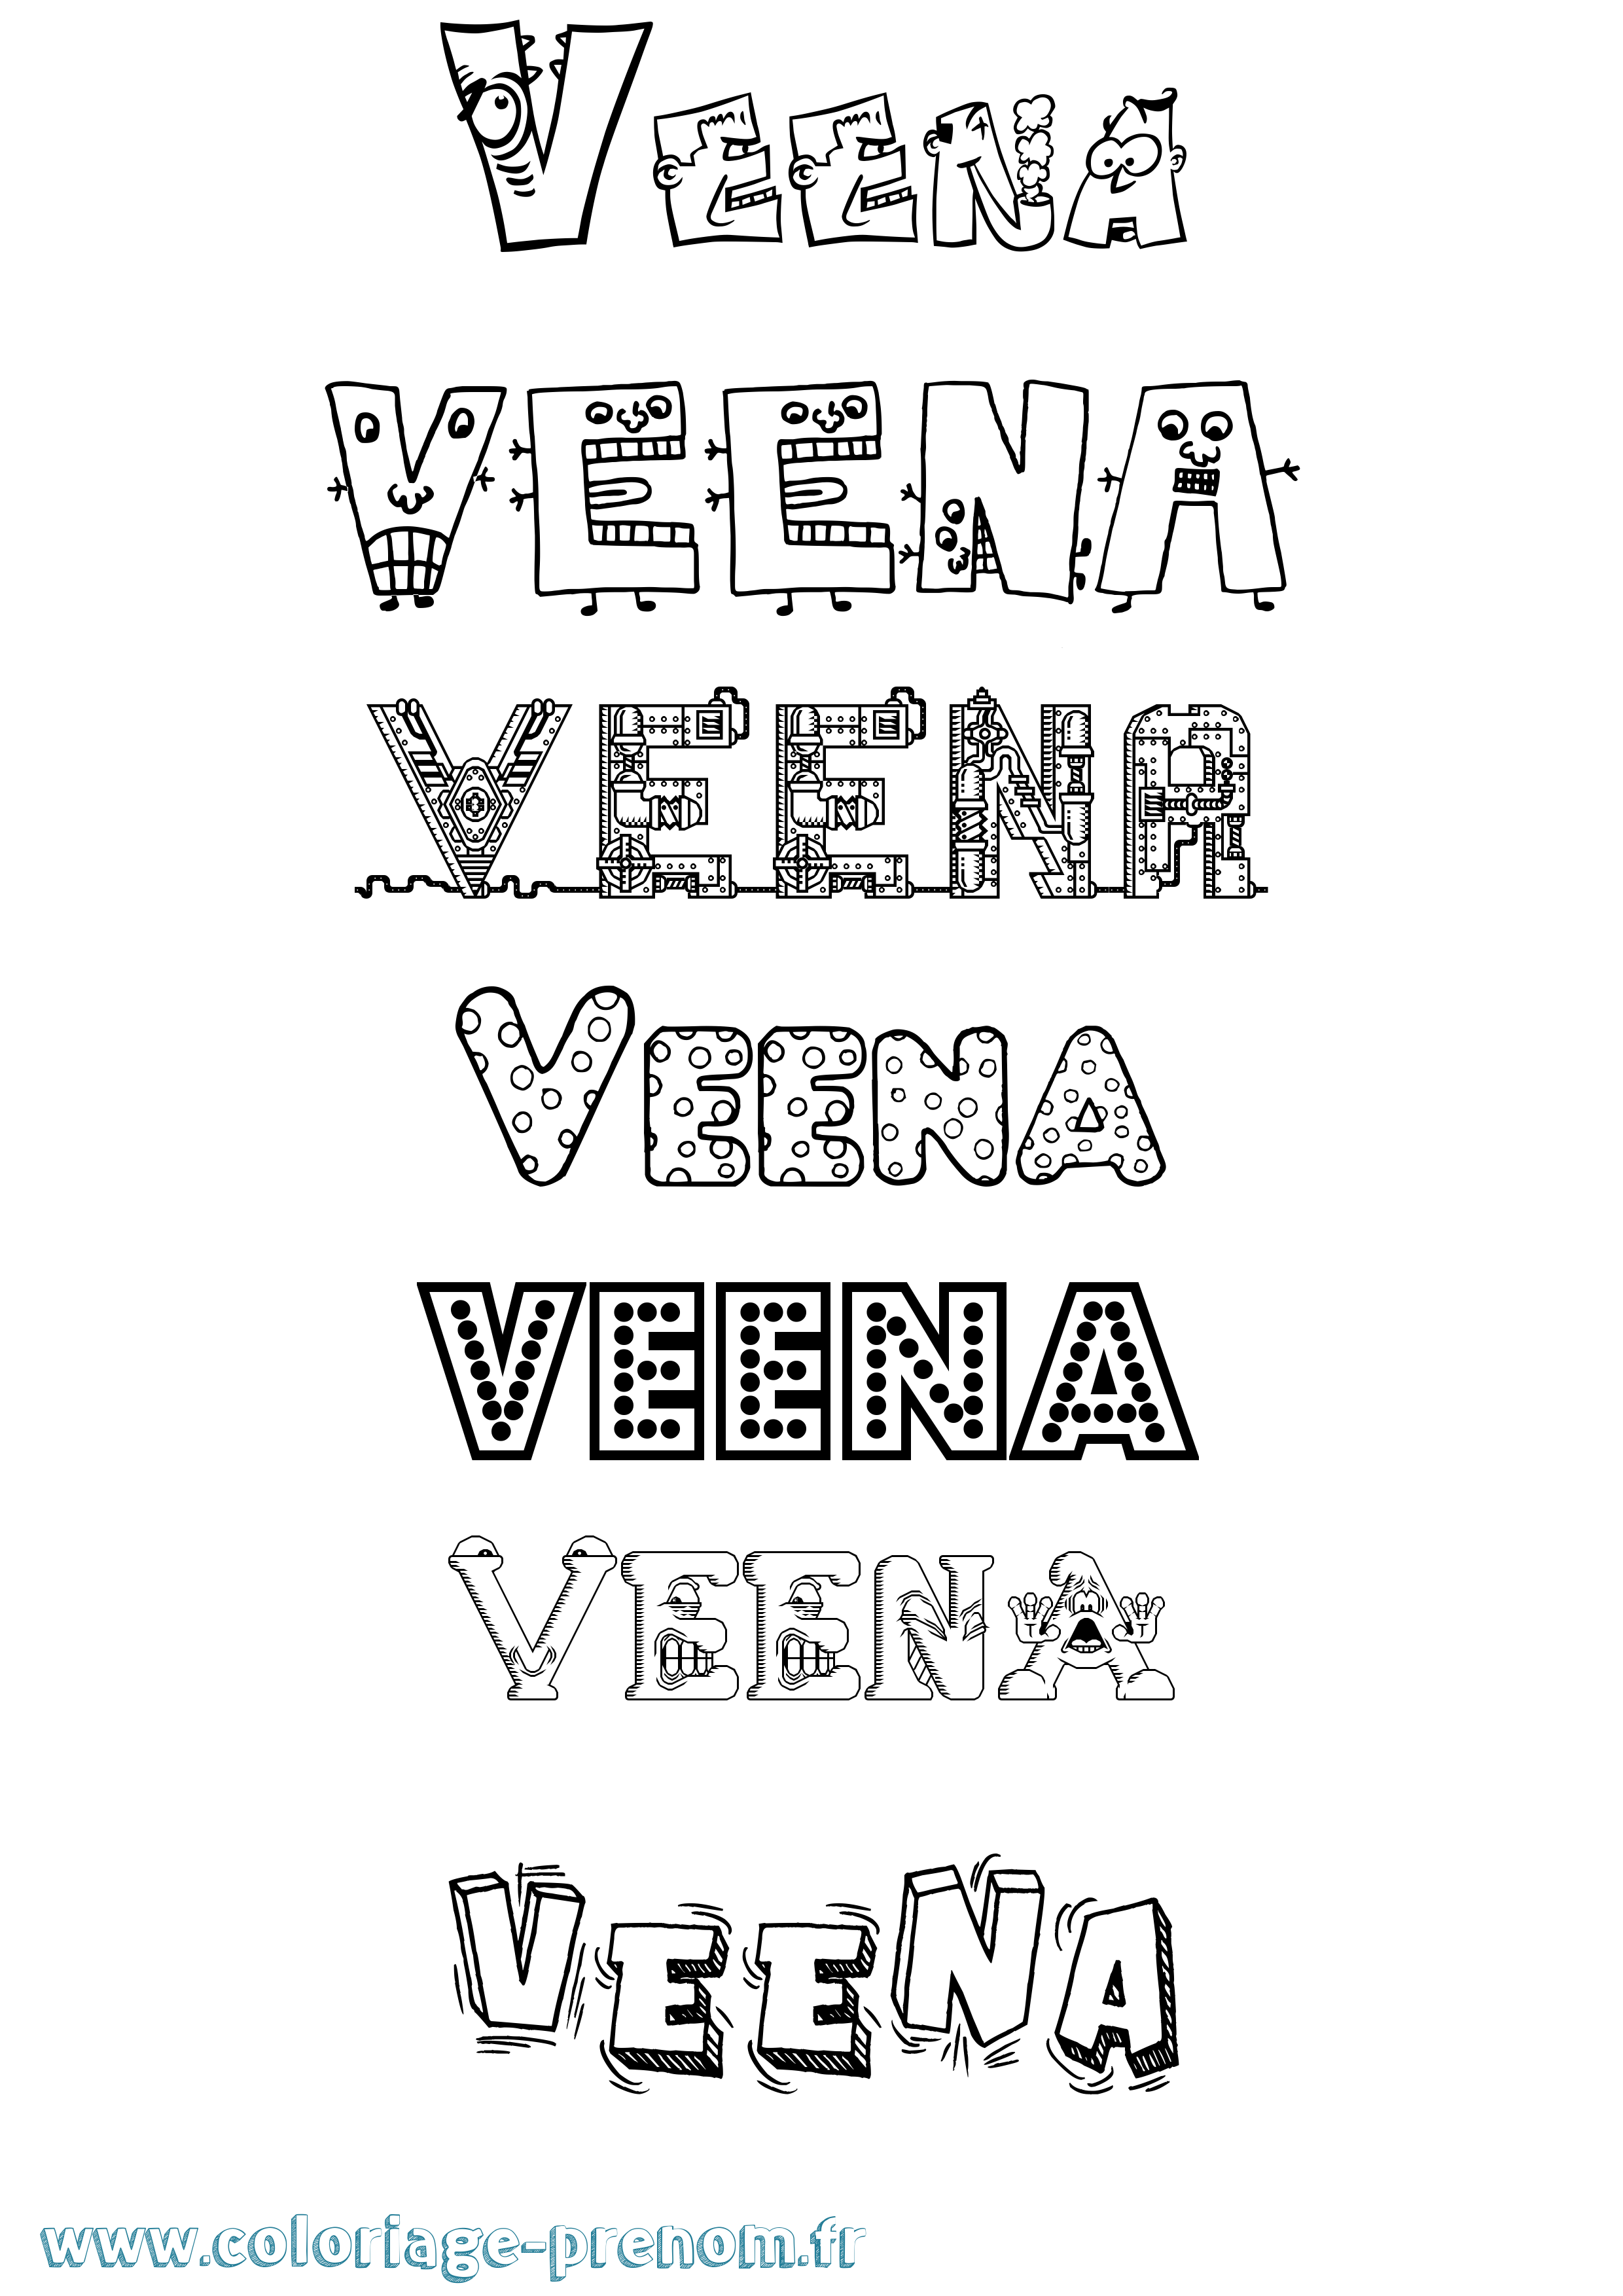 Coloriage prénom Veena Fun